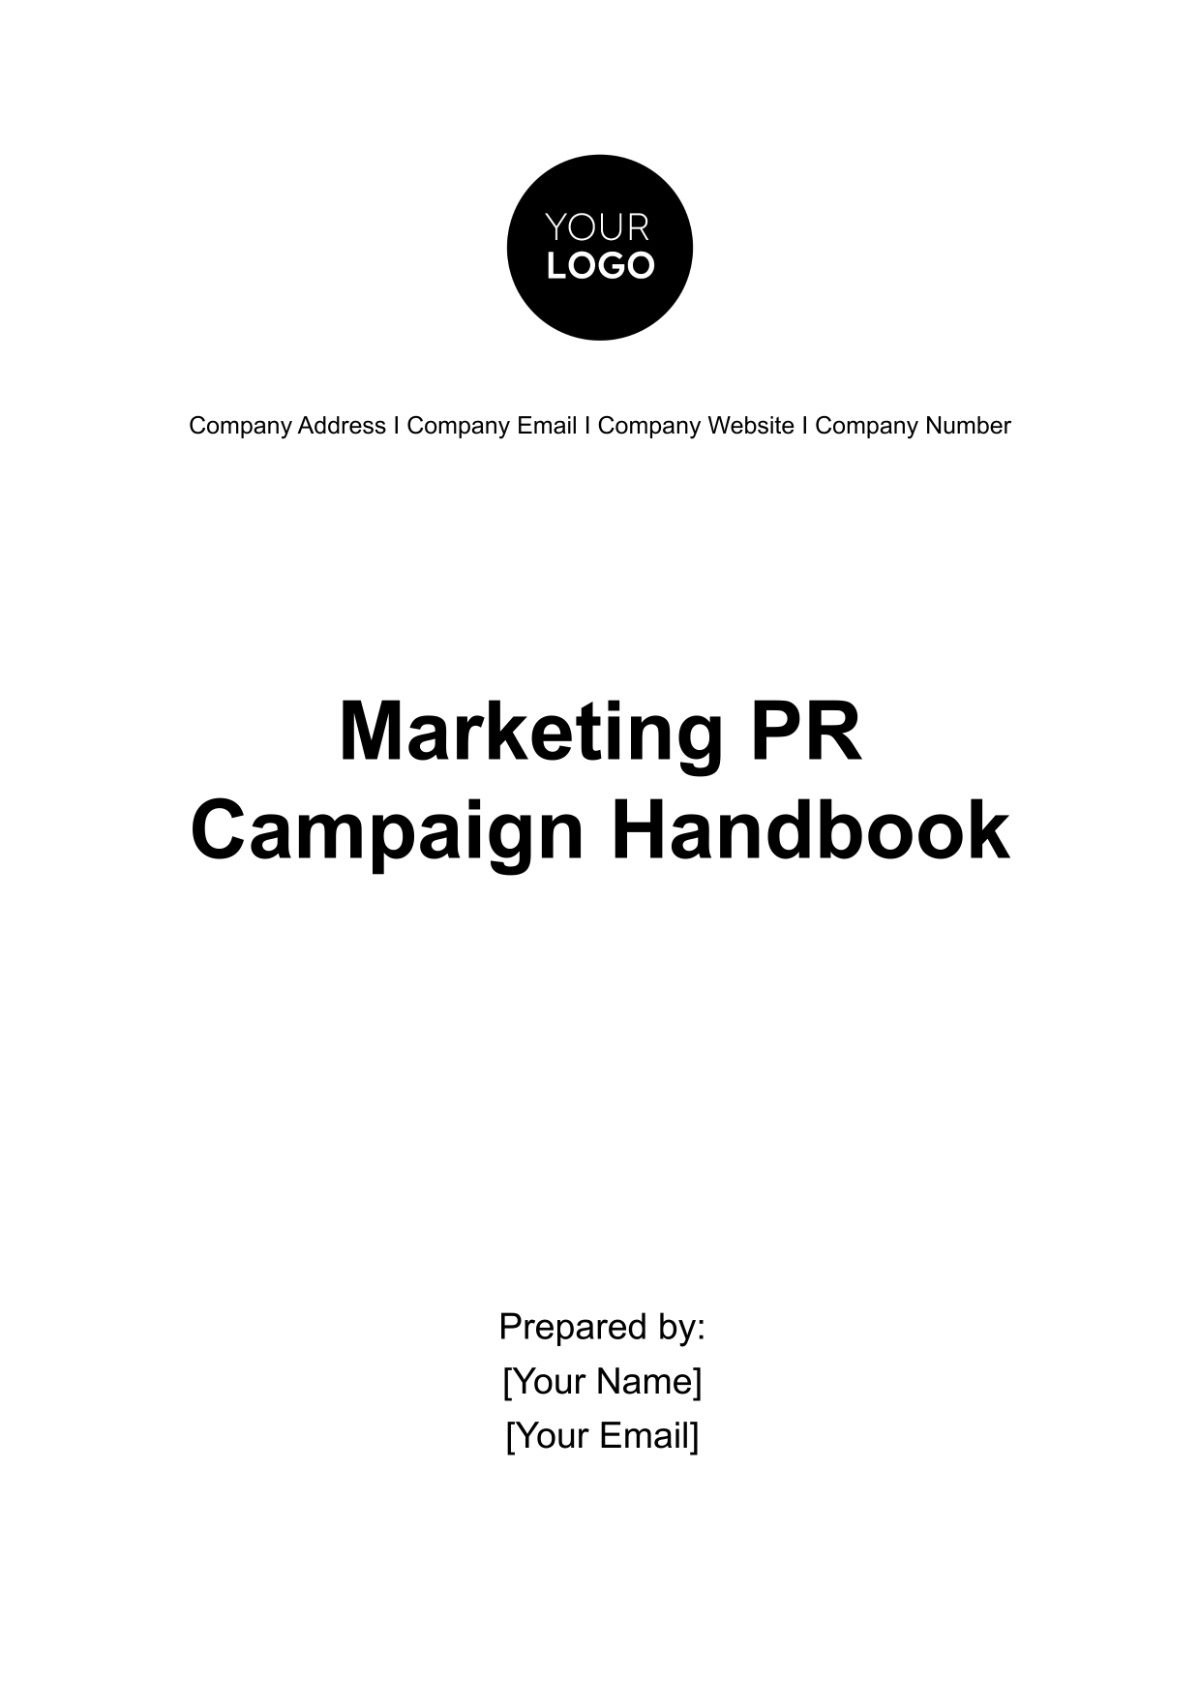 Marketing PR Campaign Pamphlet Template